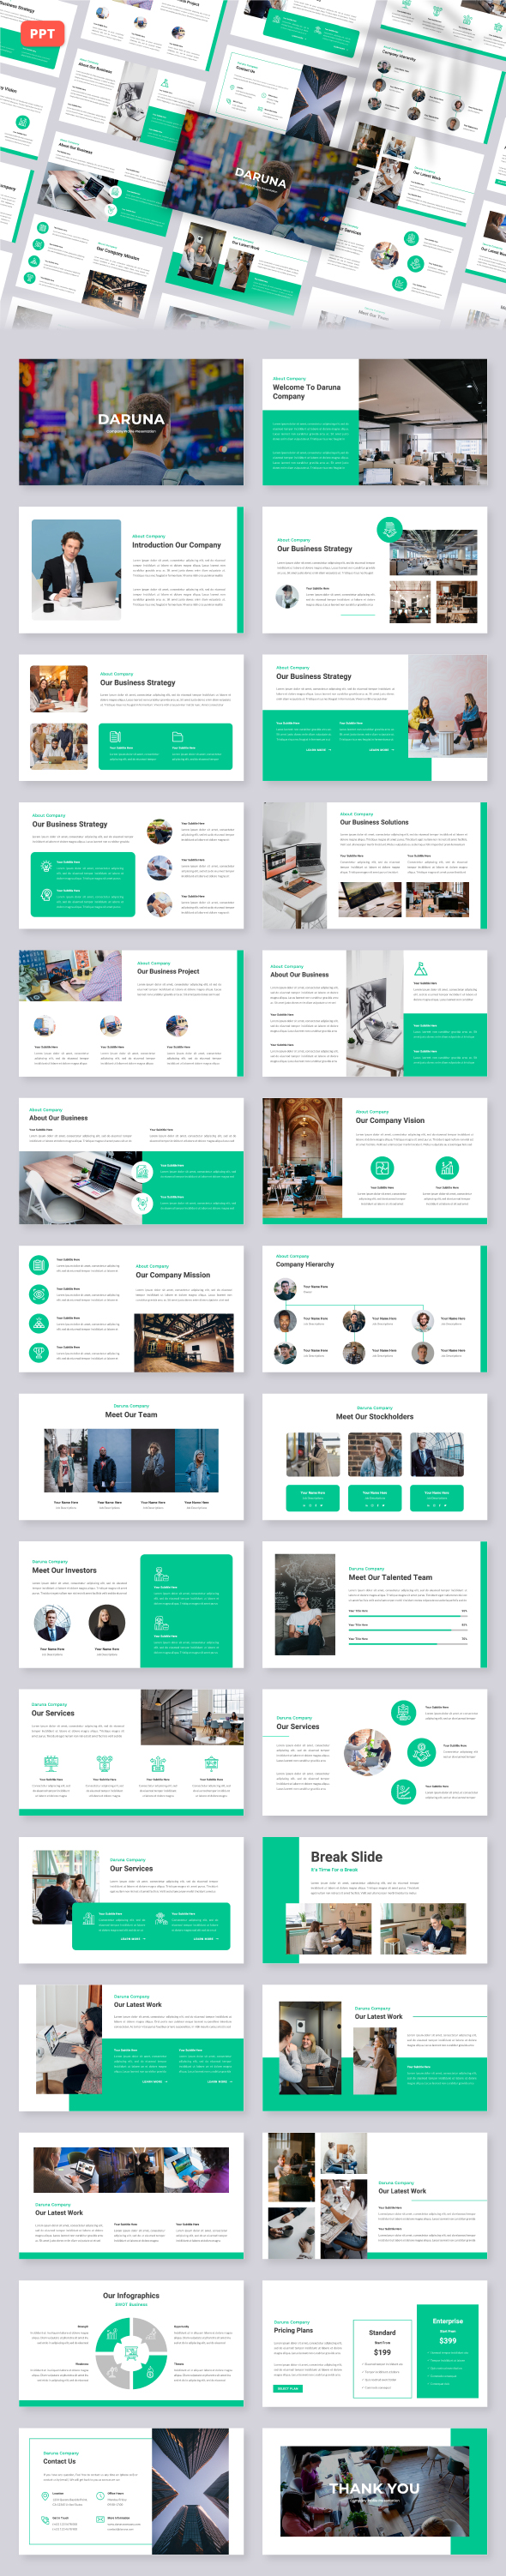 Daruna – Company Profile PowerPoint Template